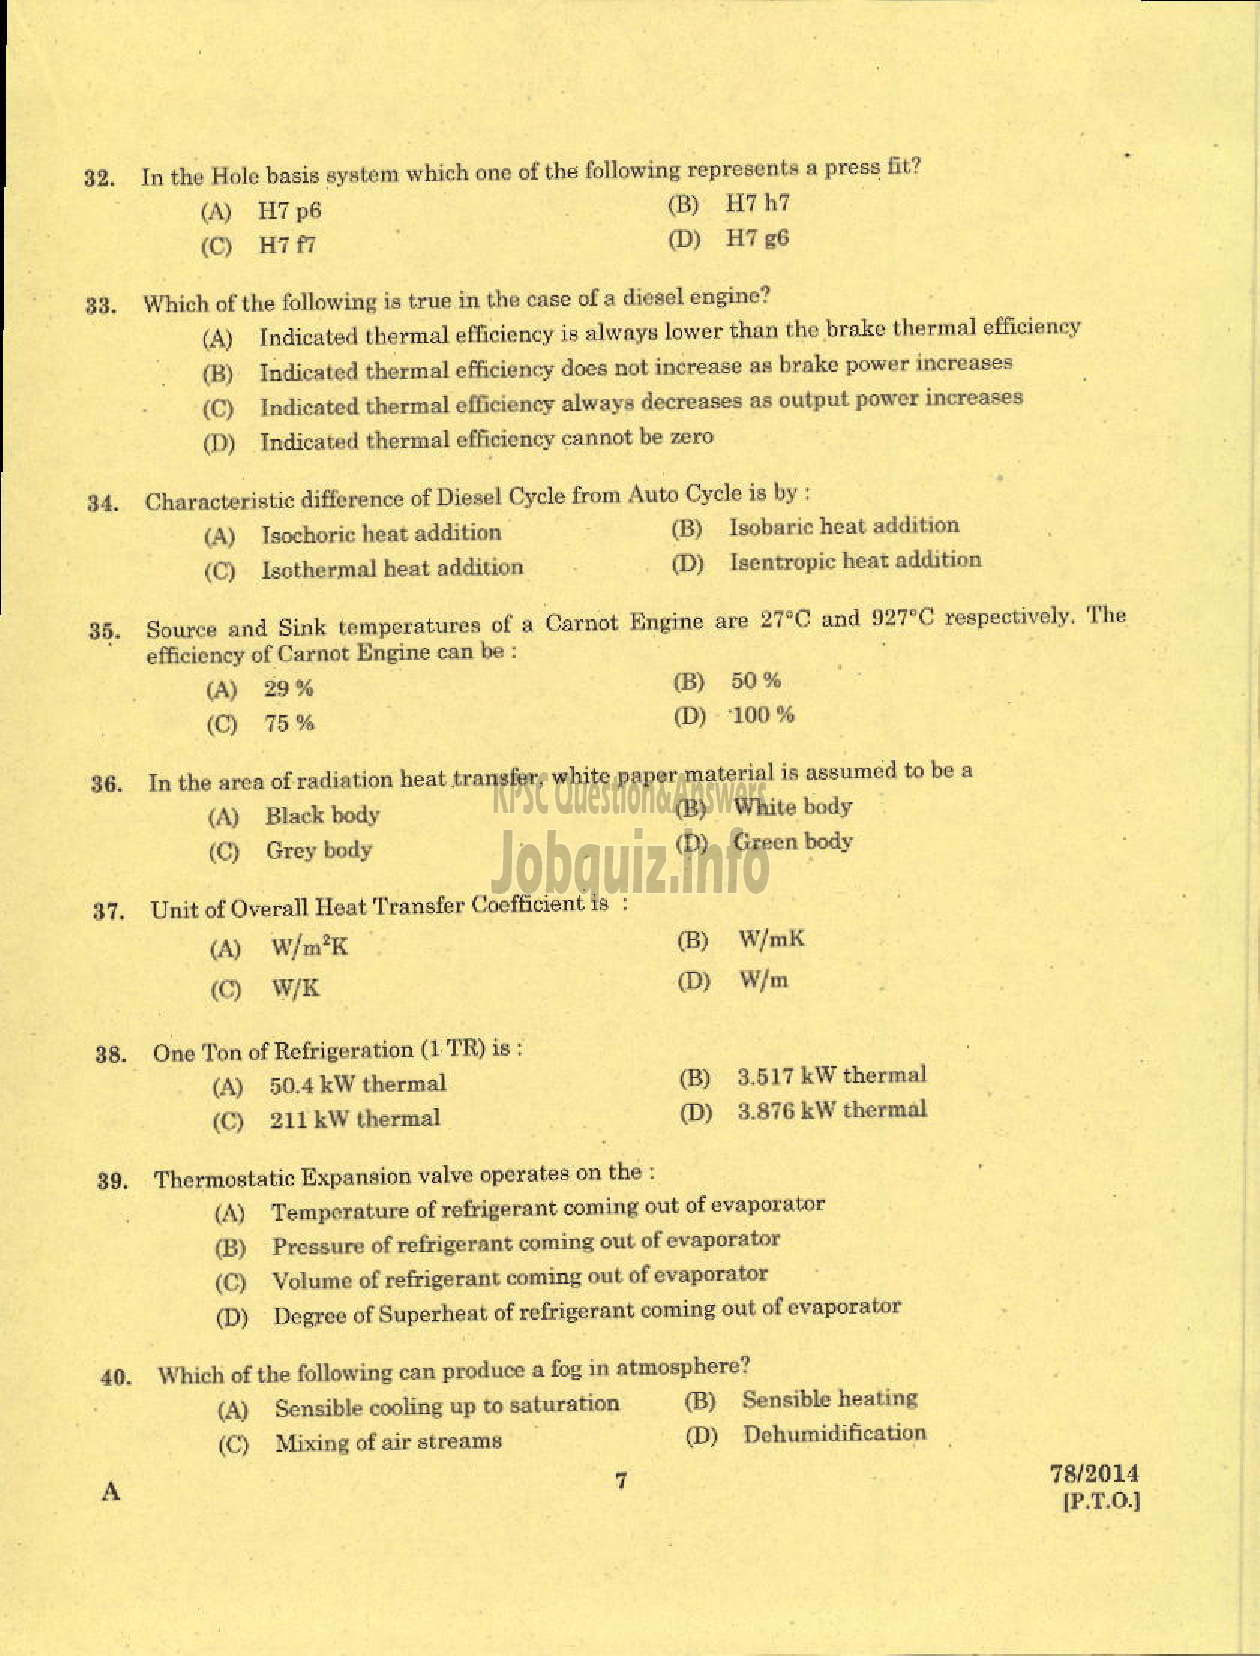 Kerala PSC Question Paper - SENIOR MECHANIC HARBOUR ENGINEERING DEPARTMENT-5